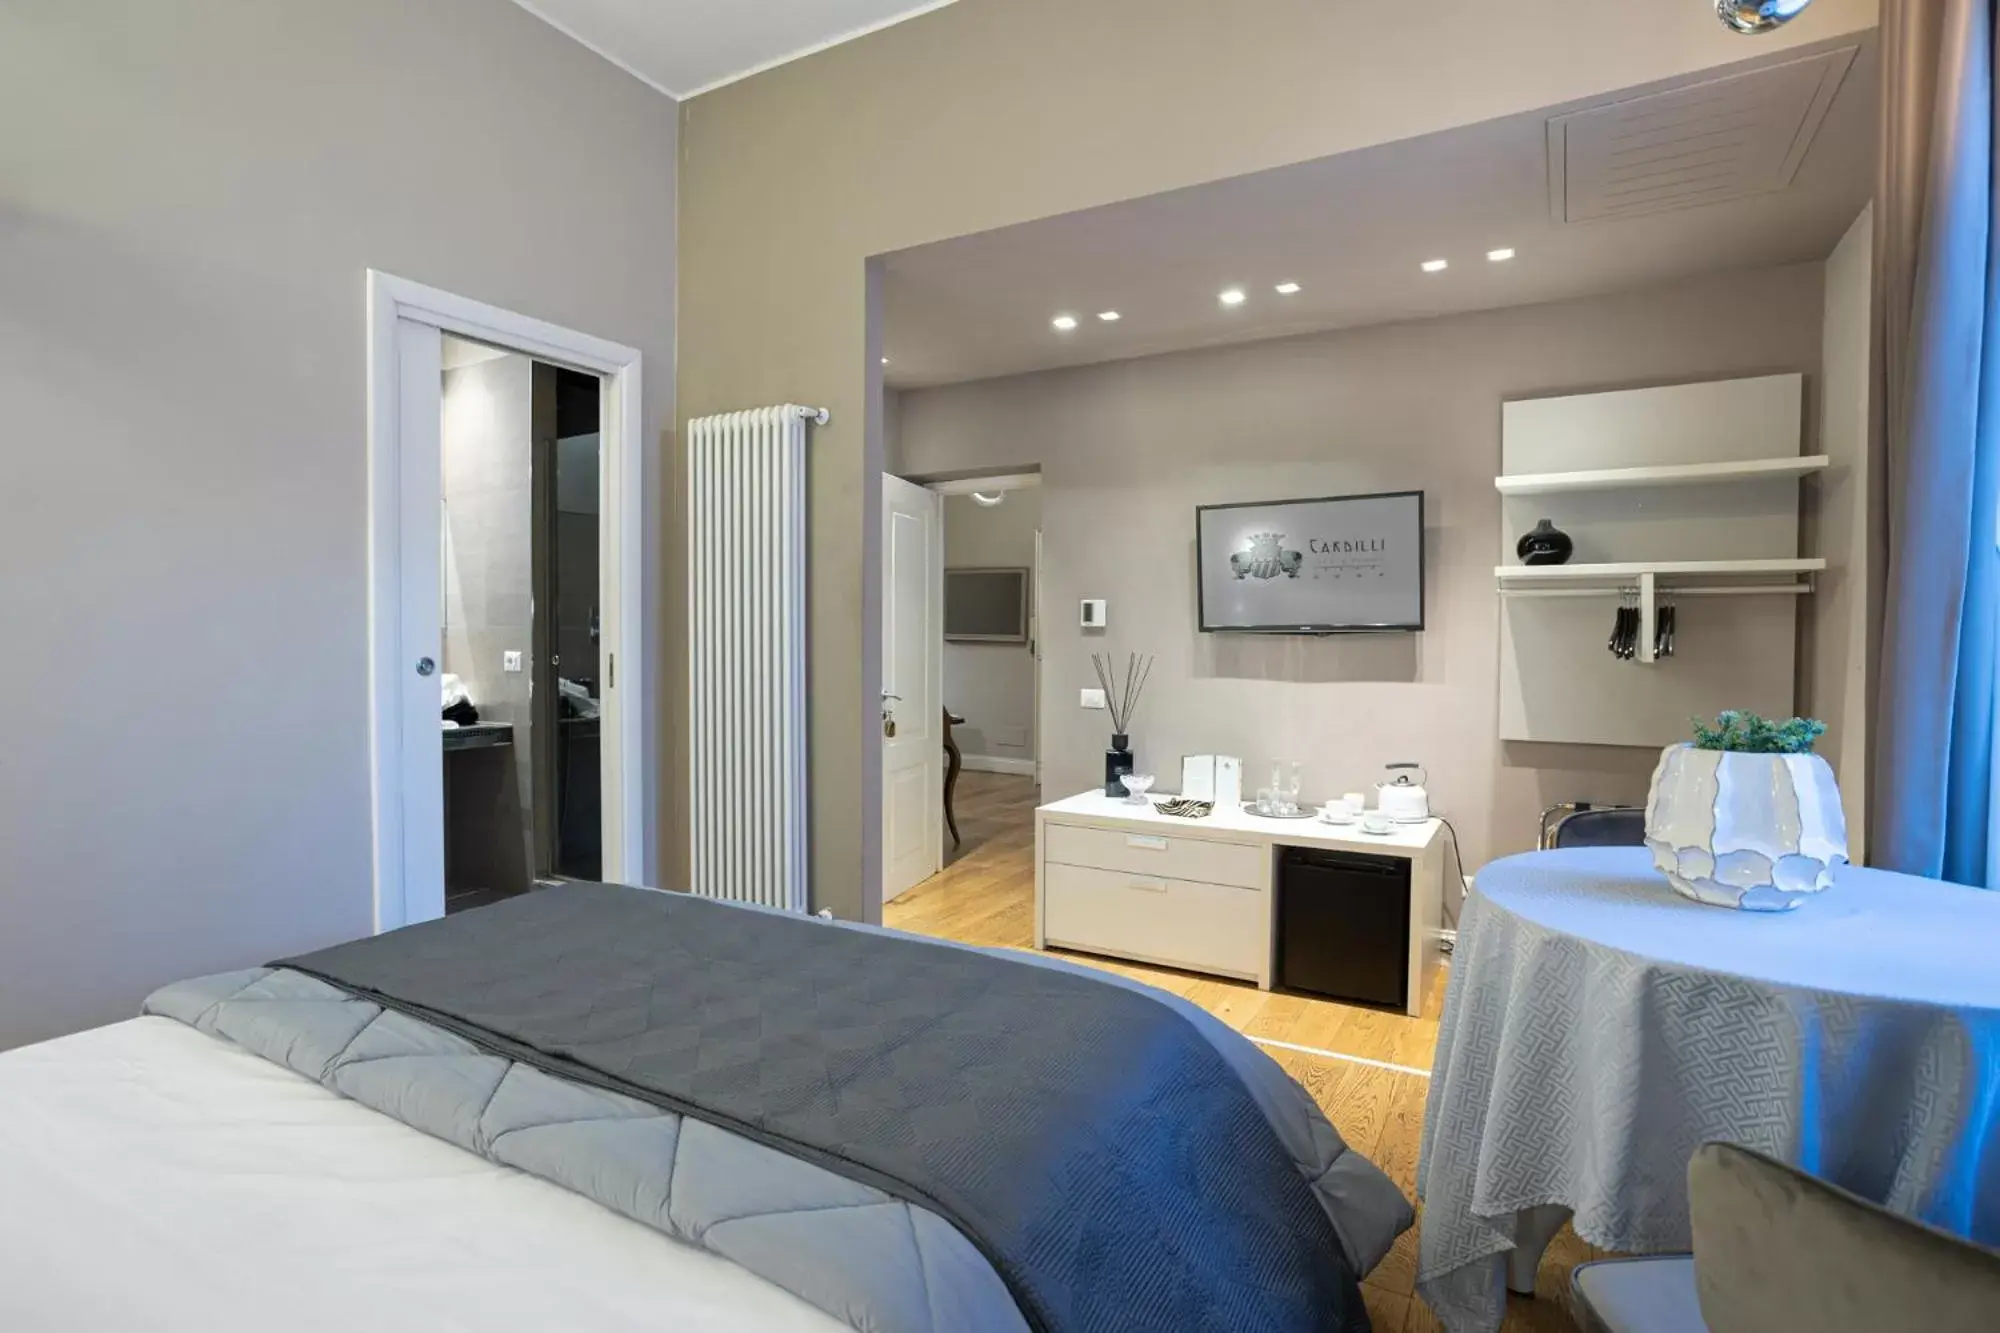 Bedroom in Cardilli Luxury Rooms